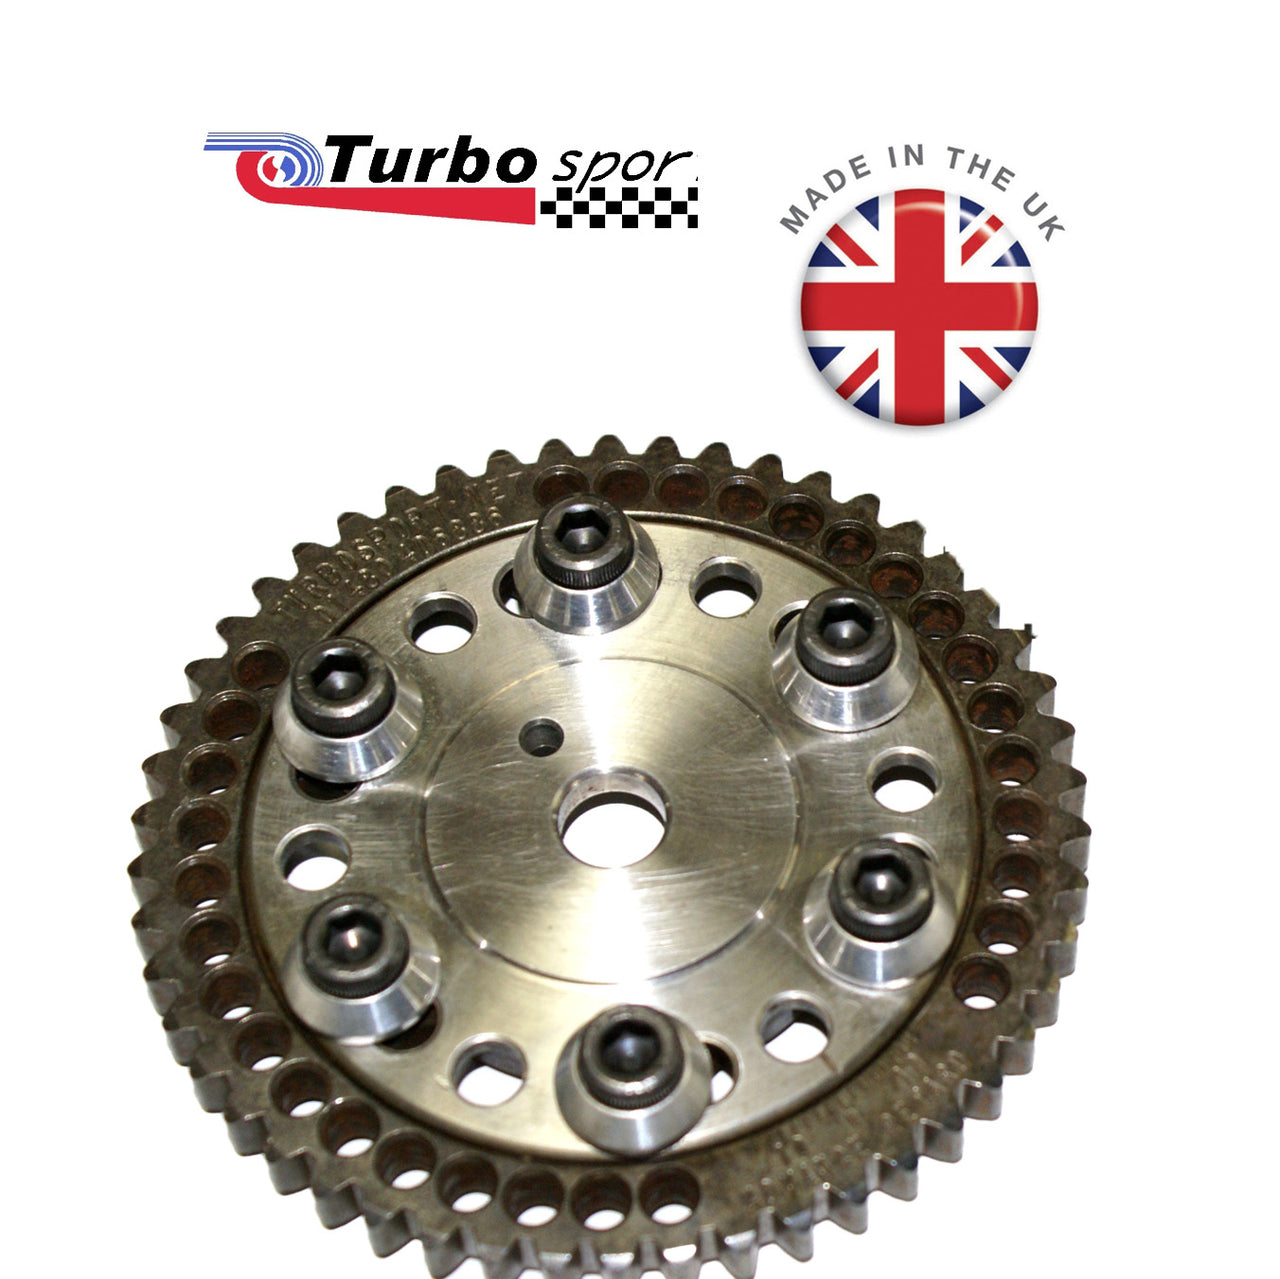 TurboSport UK Adjustable Cam Gear - Ford Duratec Engine 2.0 2.3 2.5